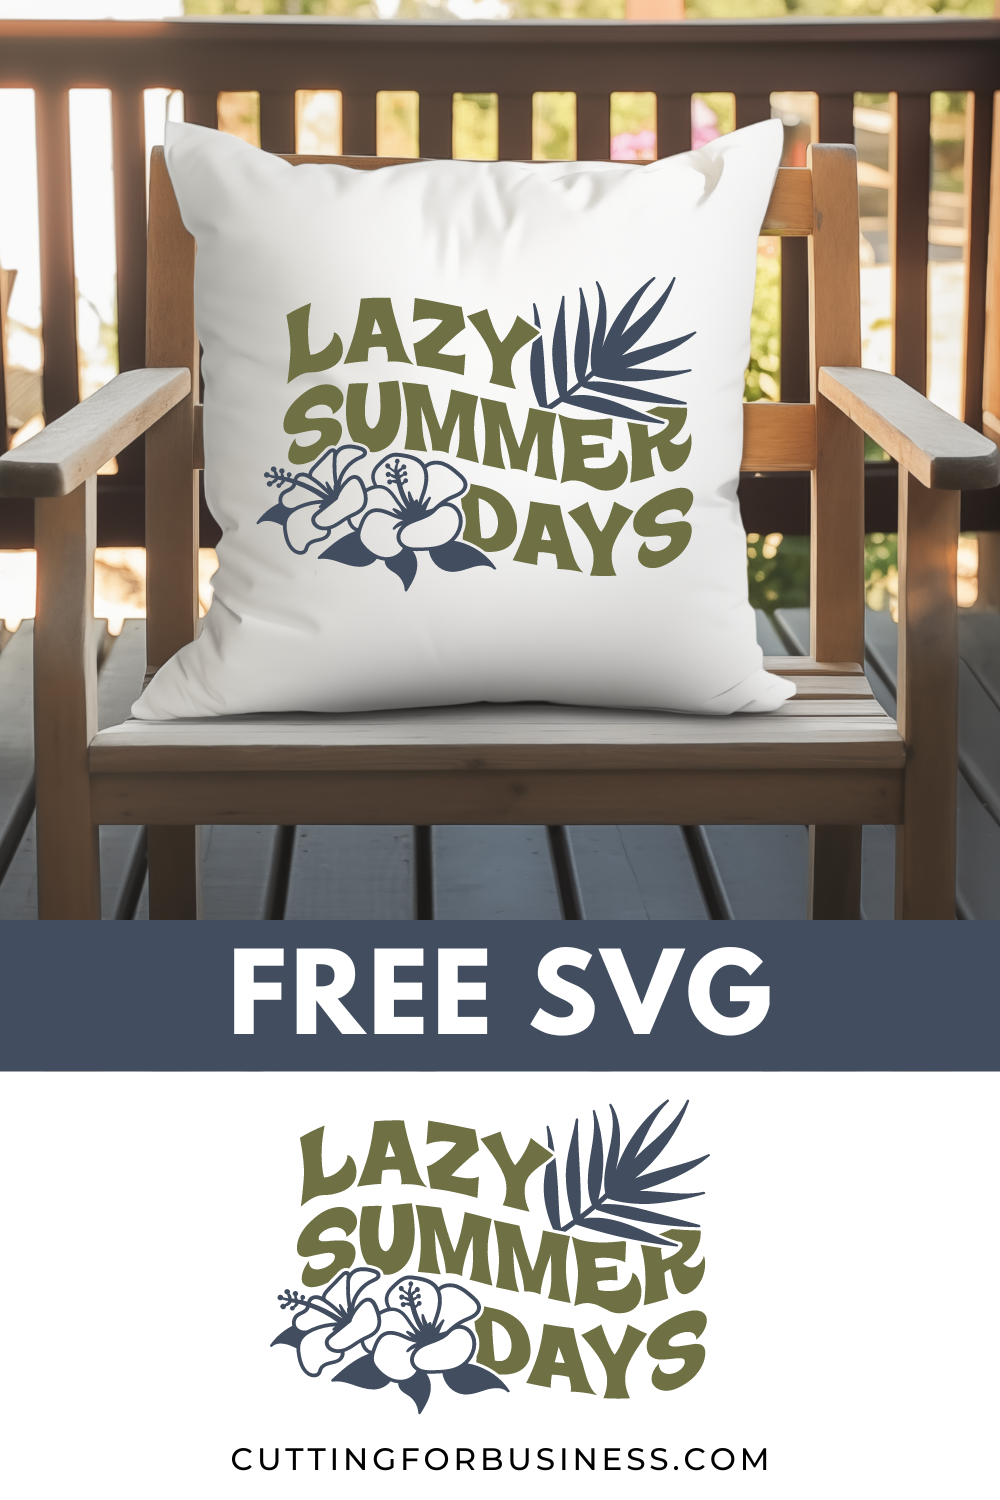 Free Summer SVG - Lazy Summer Days - cuttingforbusiness.com